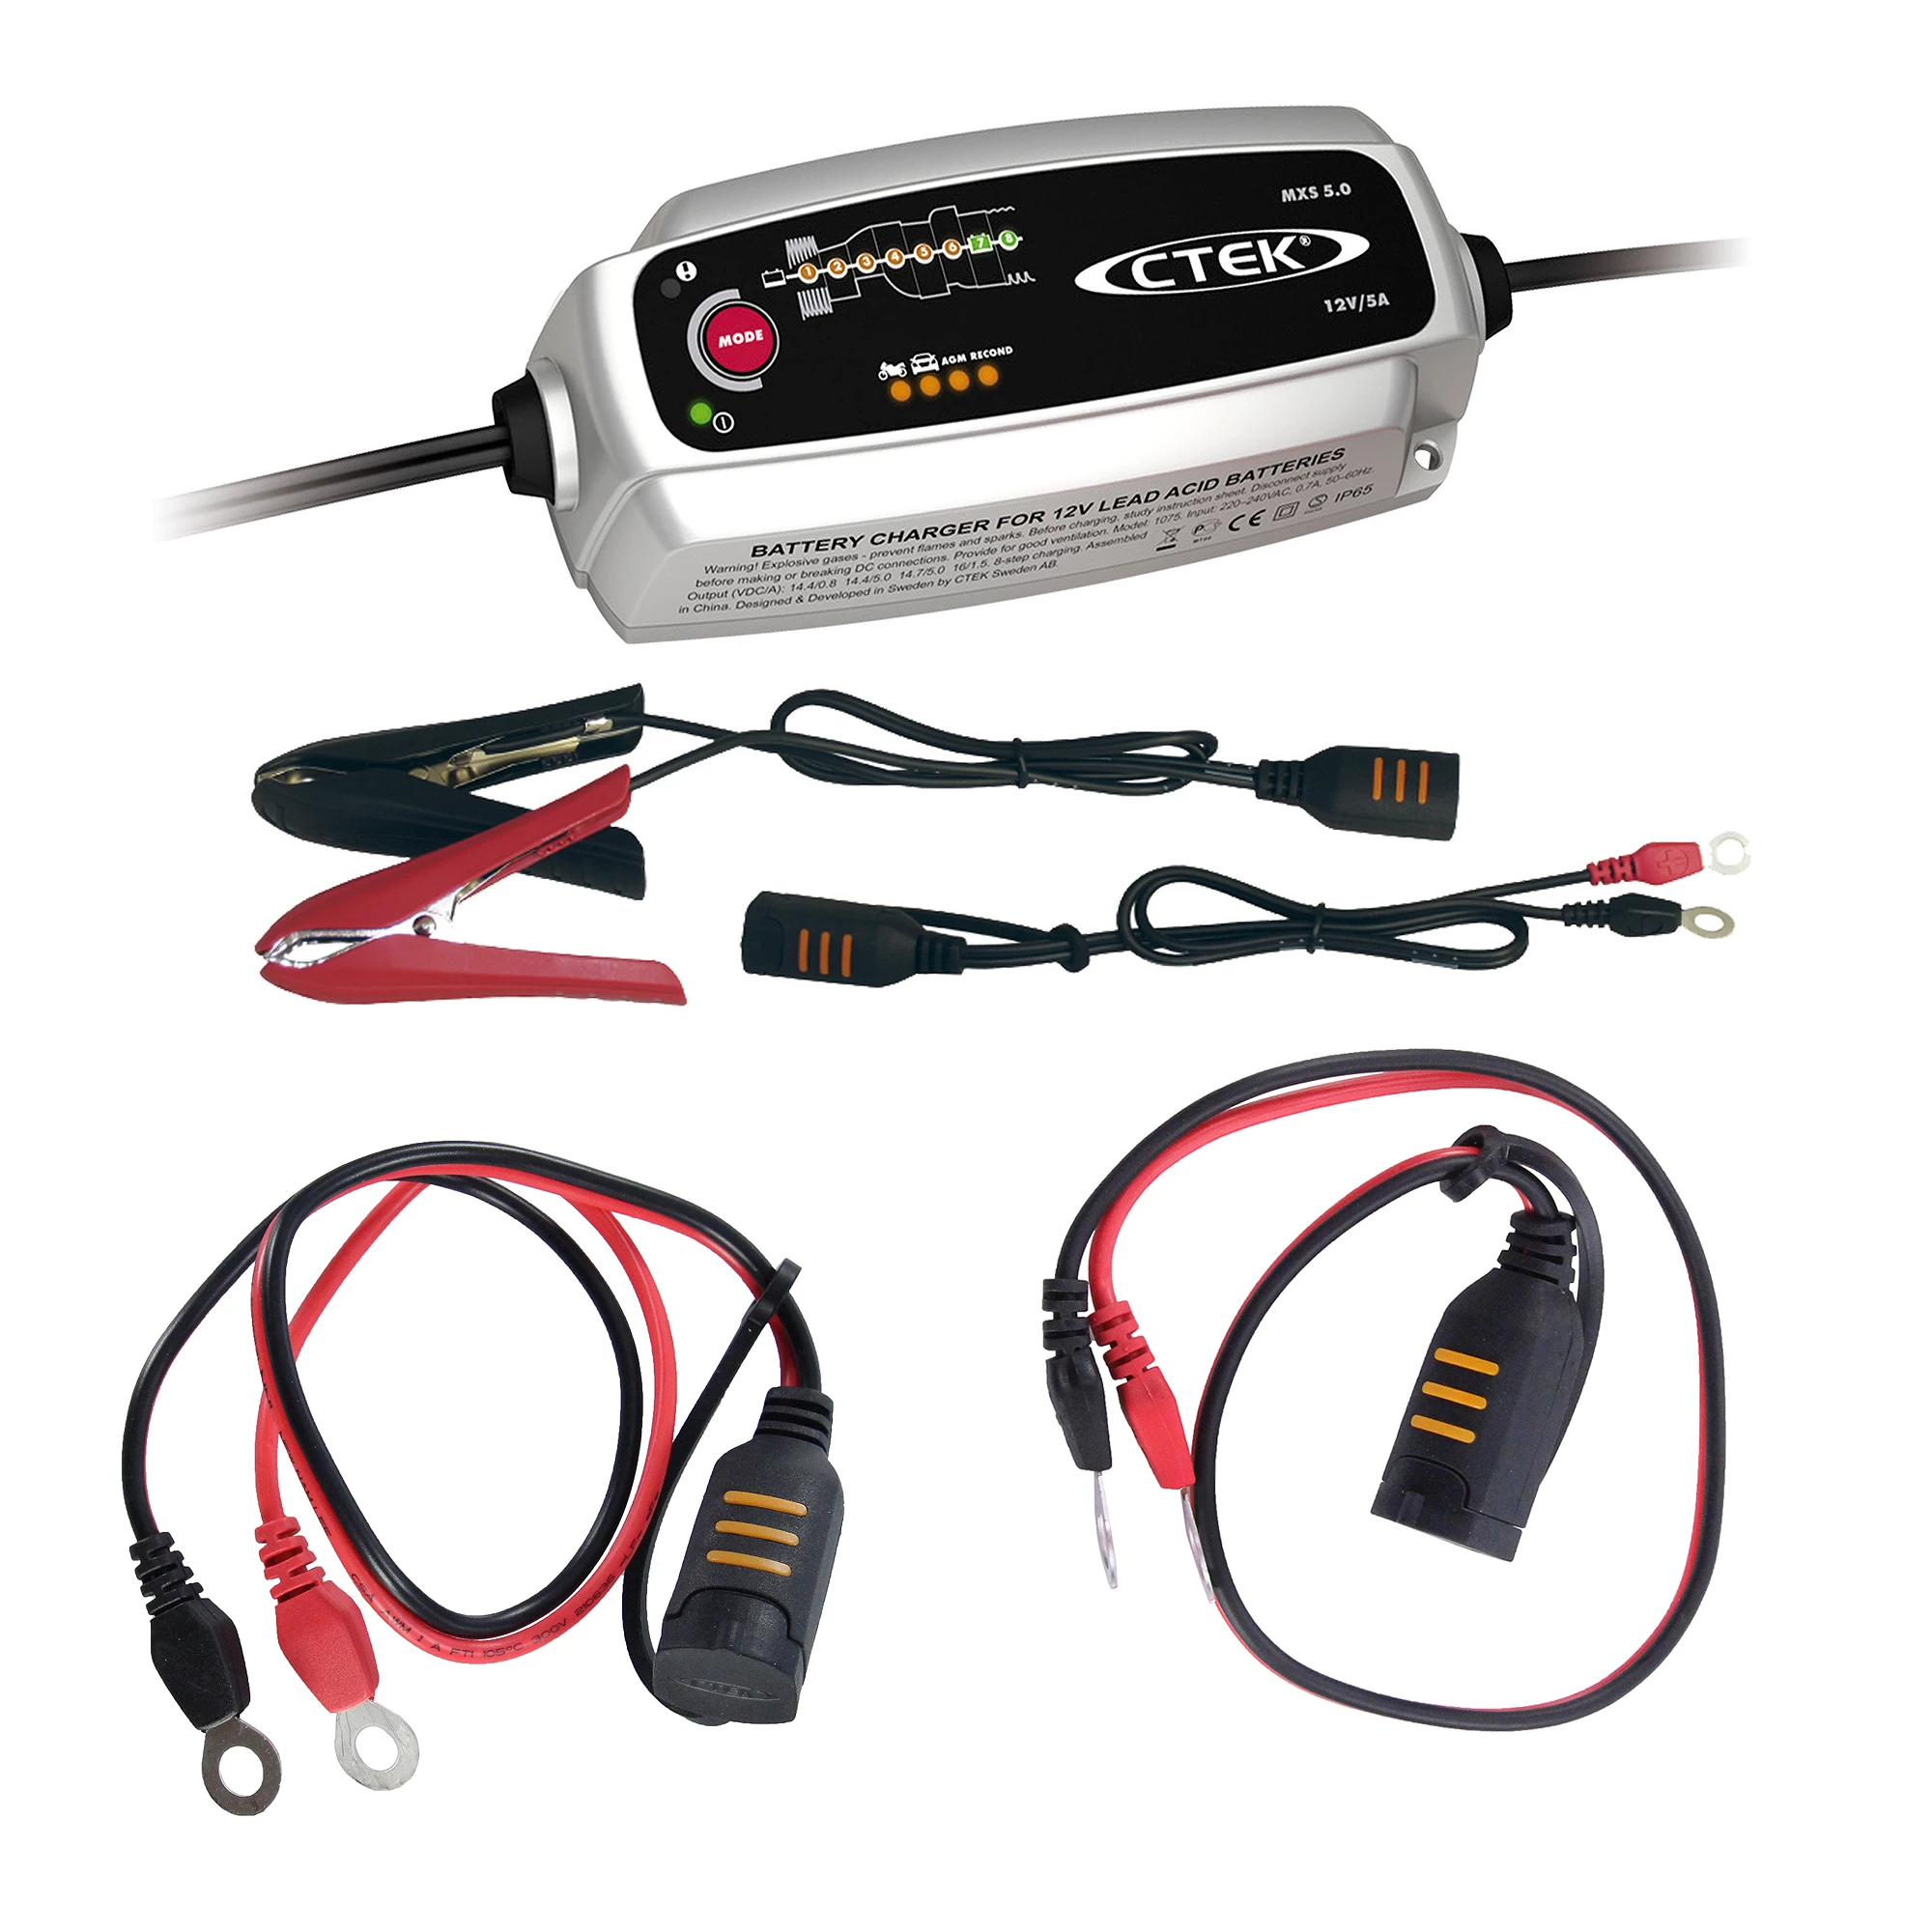 Batterie-Ladegerät CTEK 6 Programme, 8 Ladeschritte MXS 5.0, 12V, 5A mit  Polklemmen & Ringösenkabel auch für Gel-Batterien geeignet Note 1 -  perfekte Reparatur